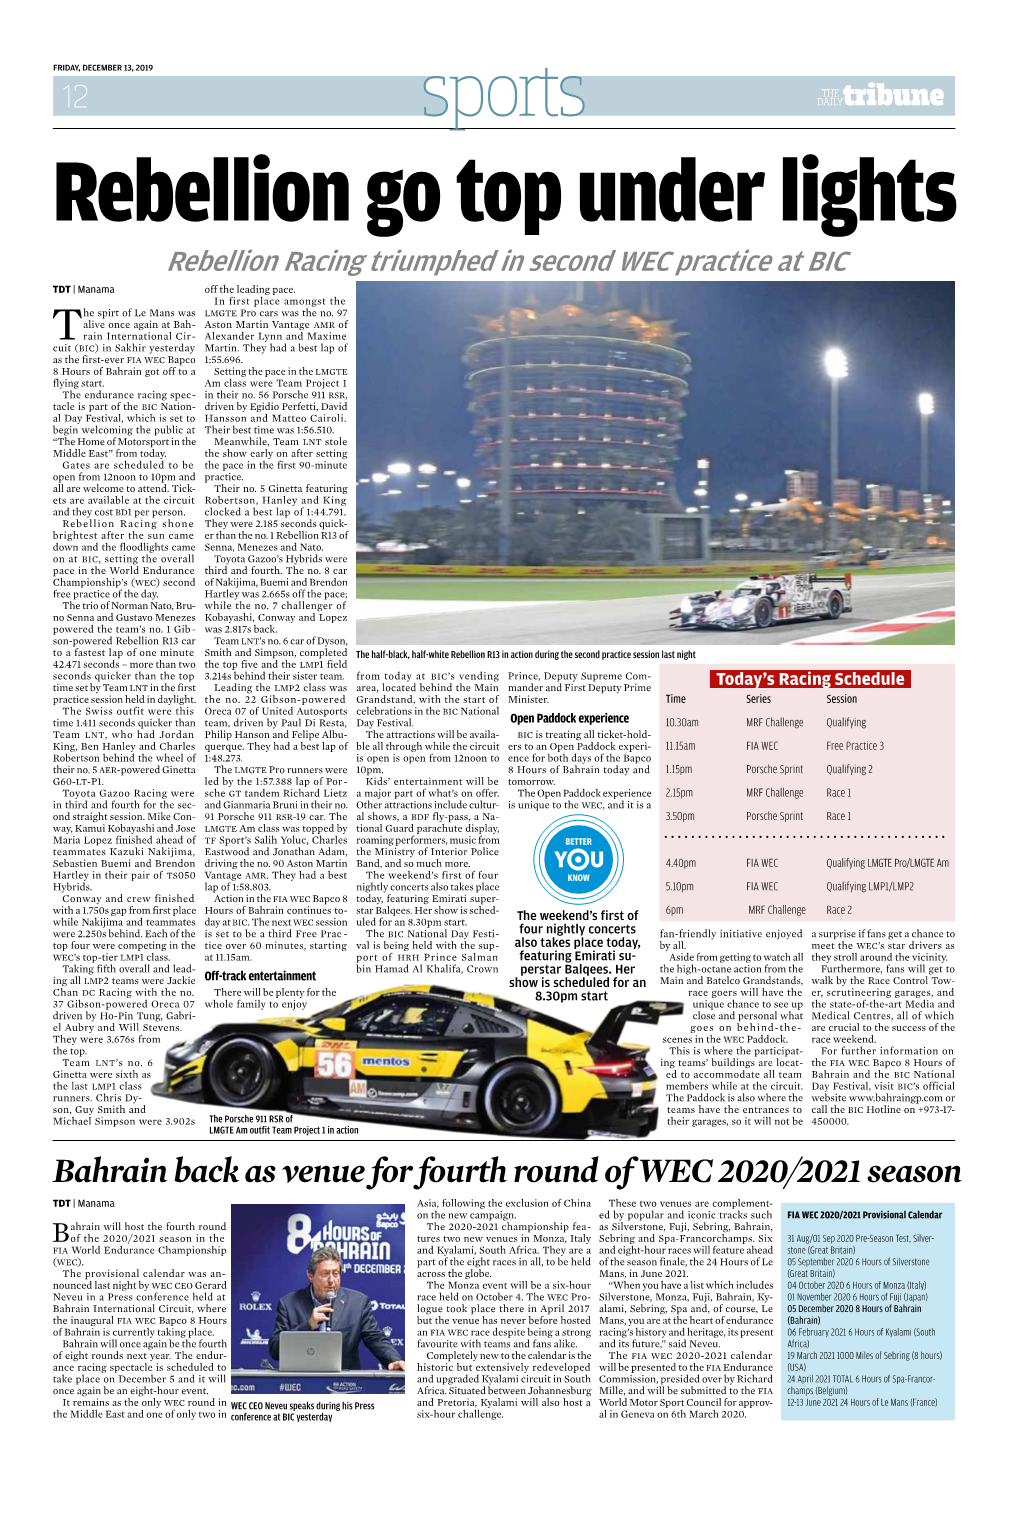 Bahrain Back As Venue for Fourth Round of WEC 2020/2021 Season